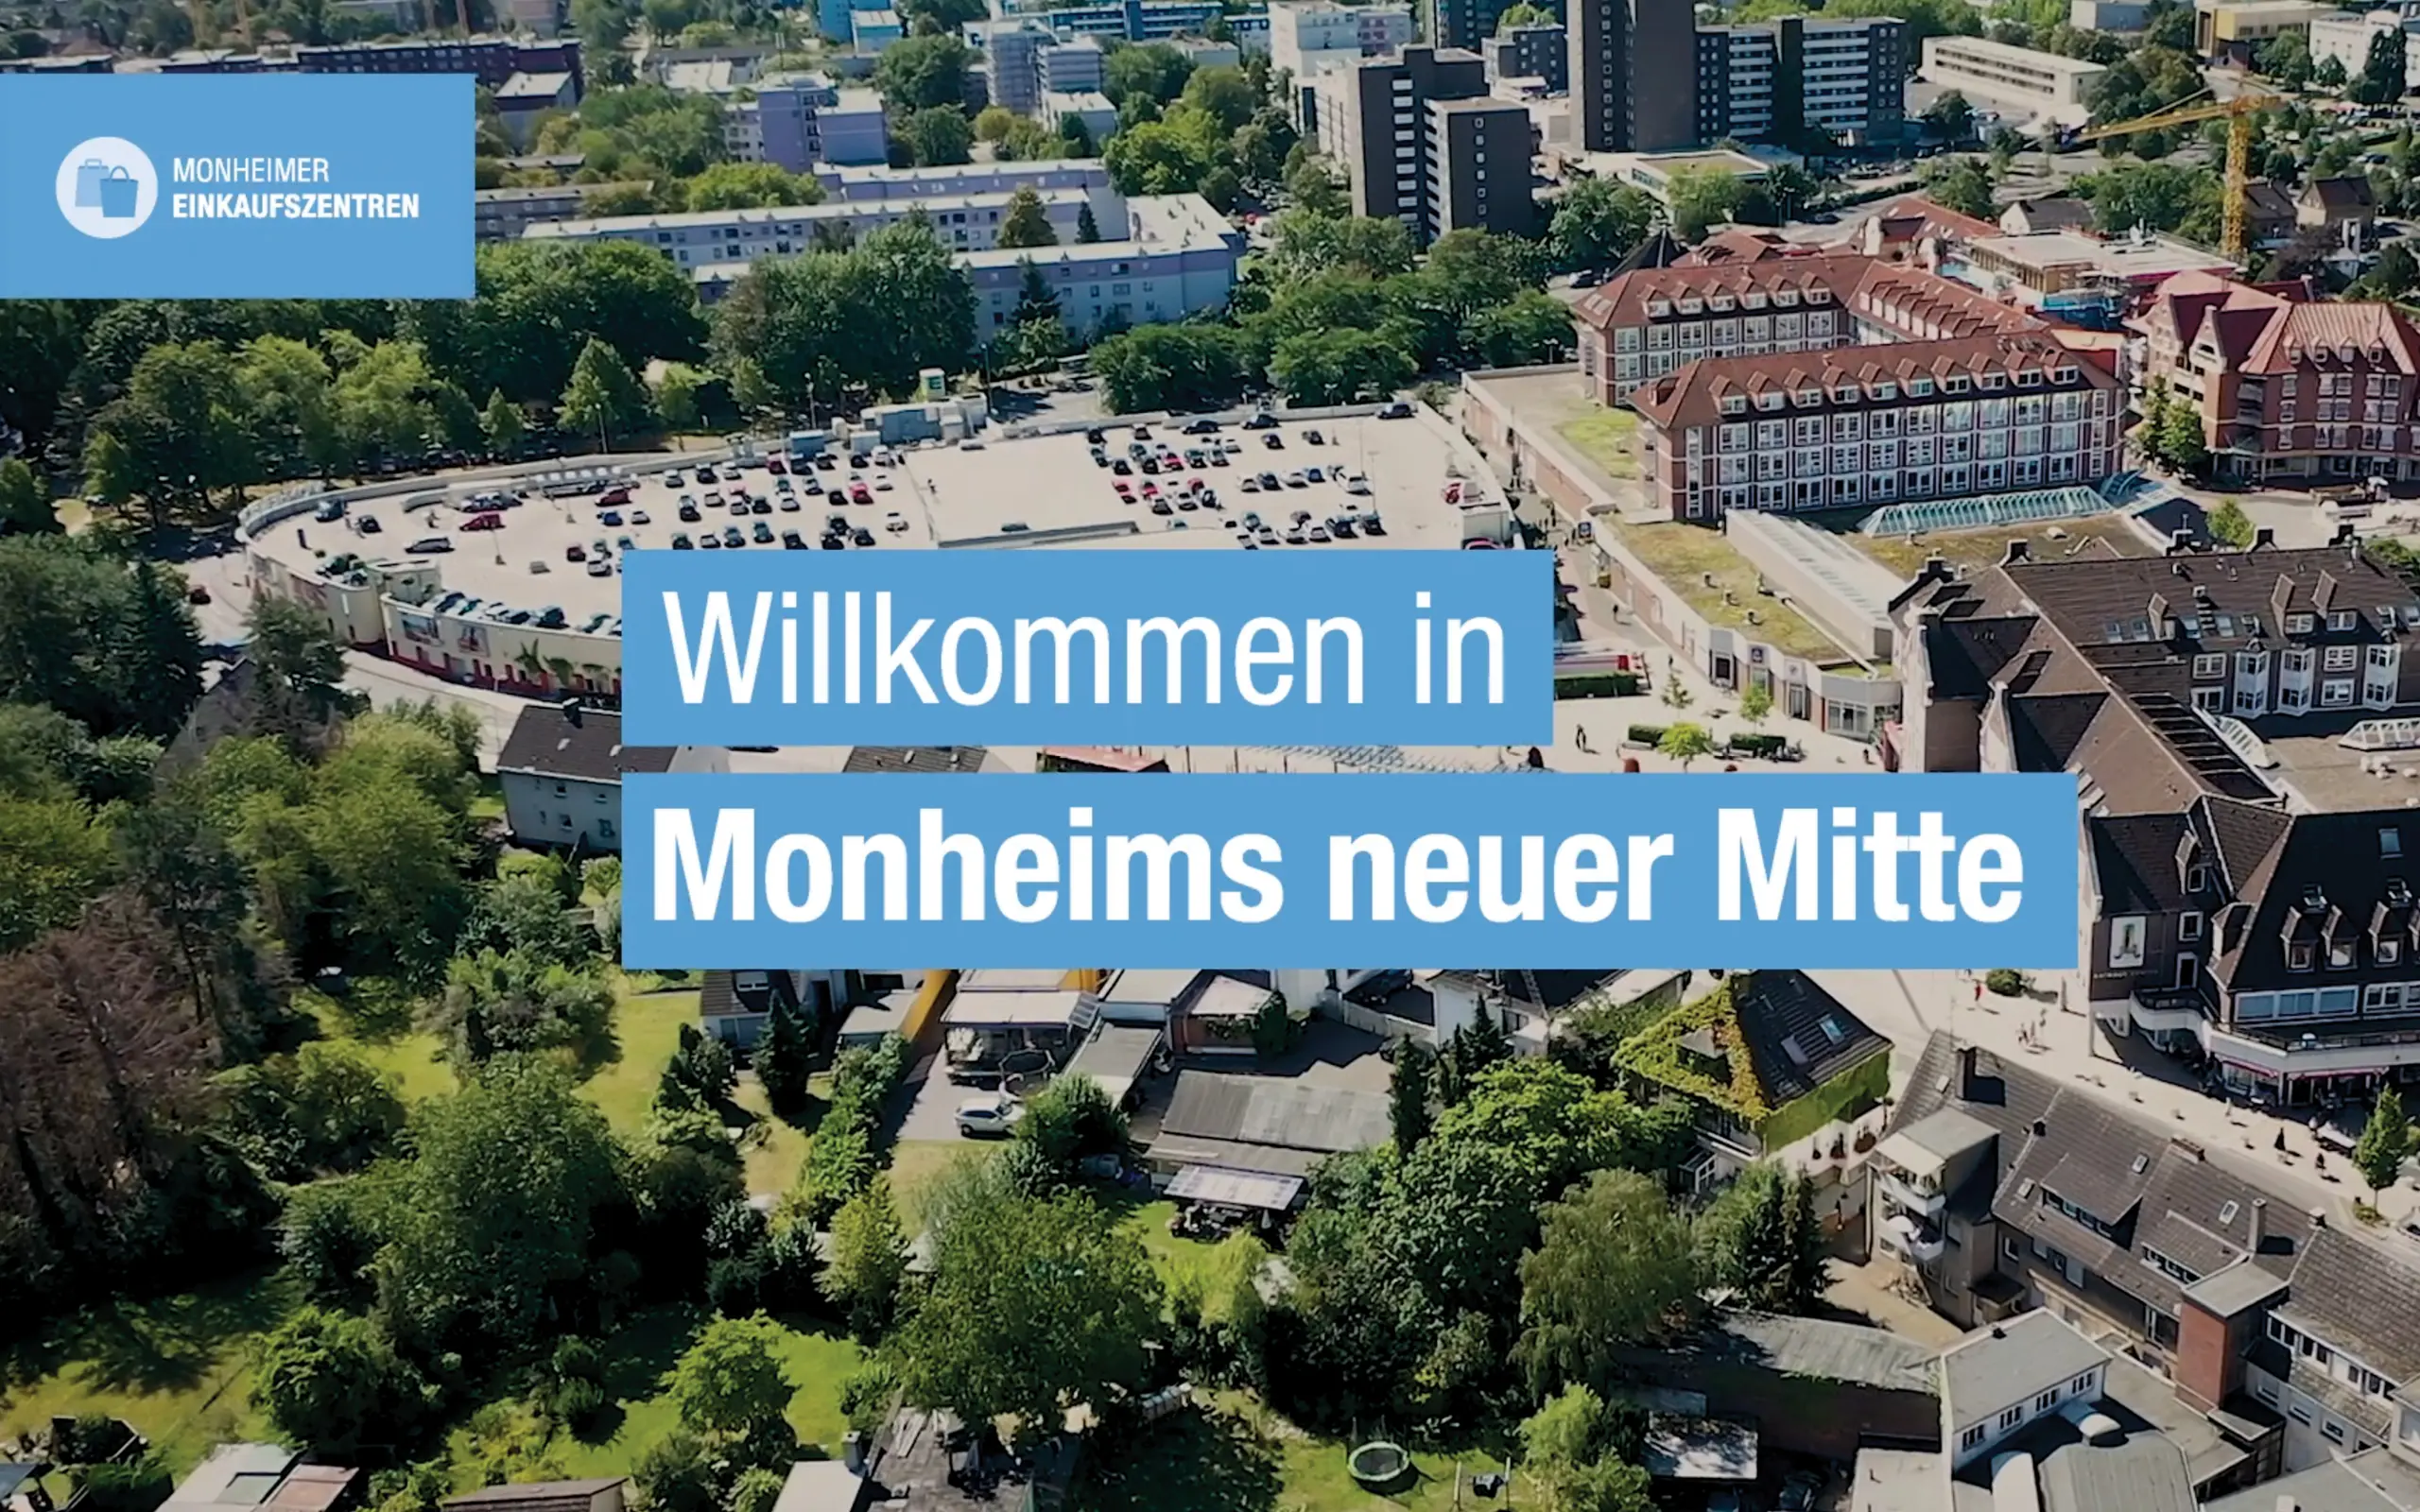 </p>
<p>Monheims neue Mitte im Filmformat</p>
<p>